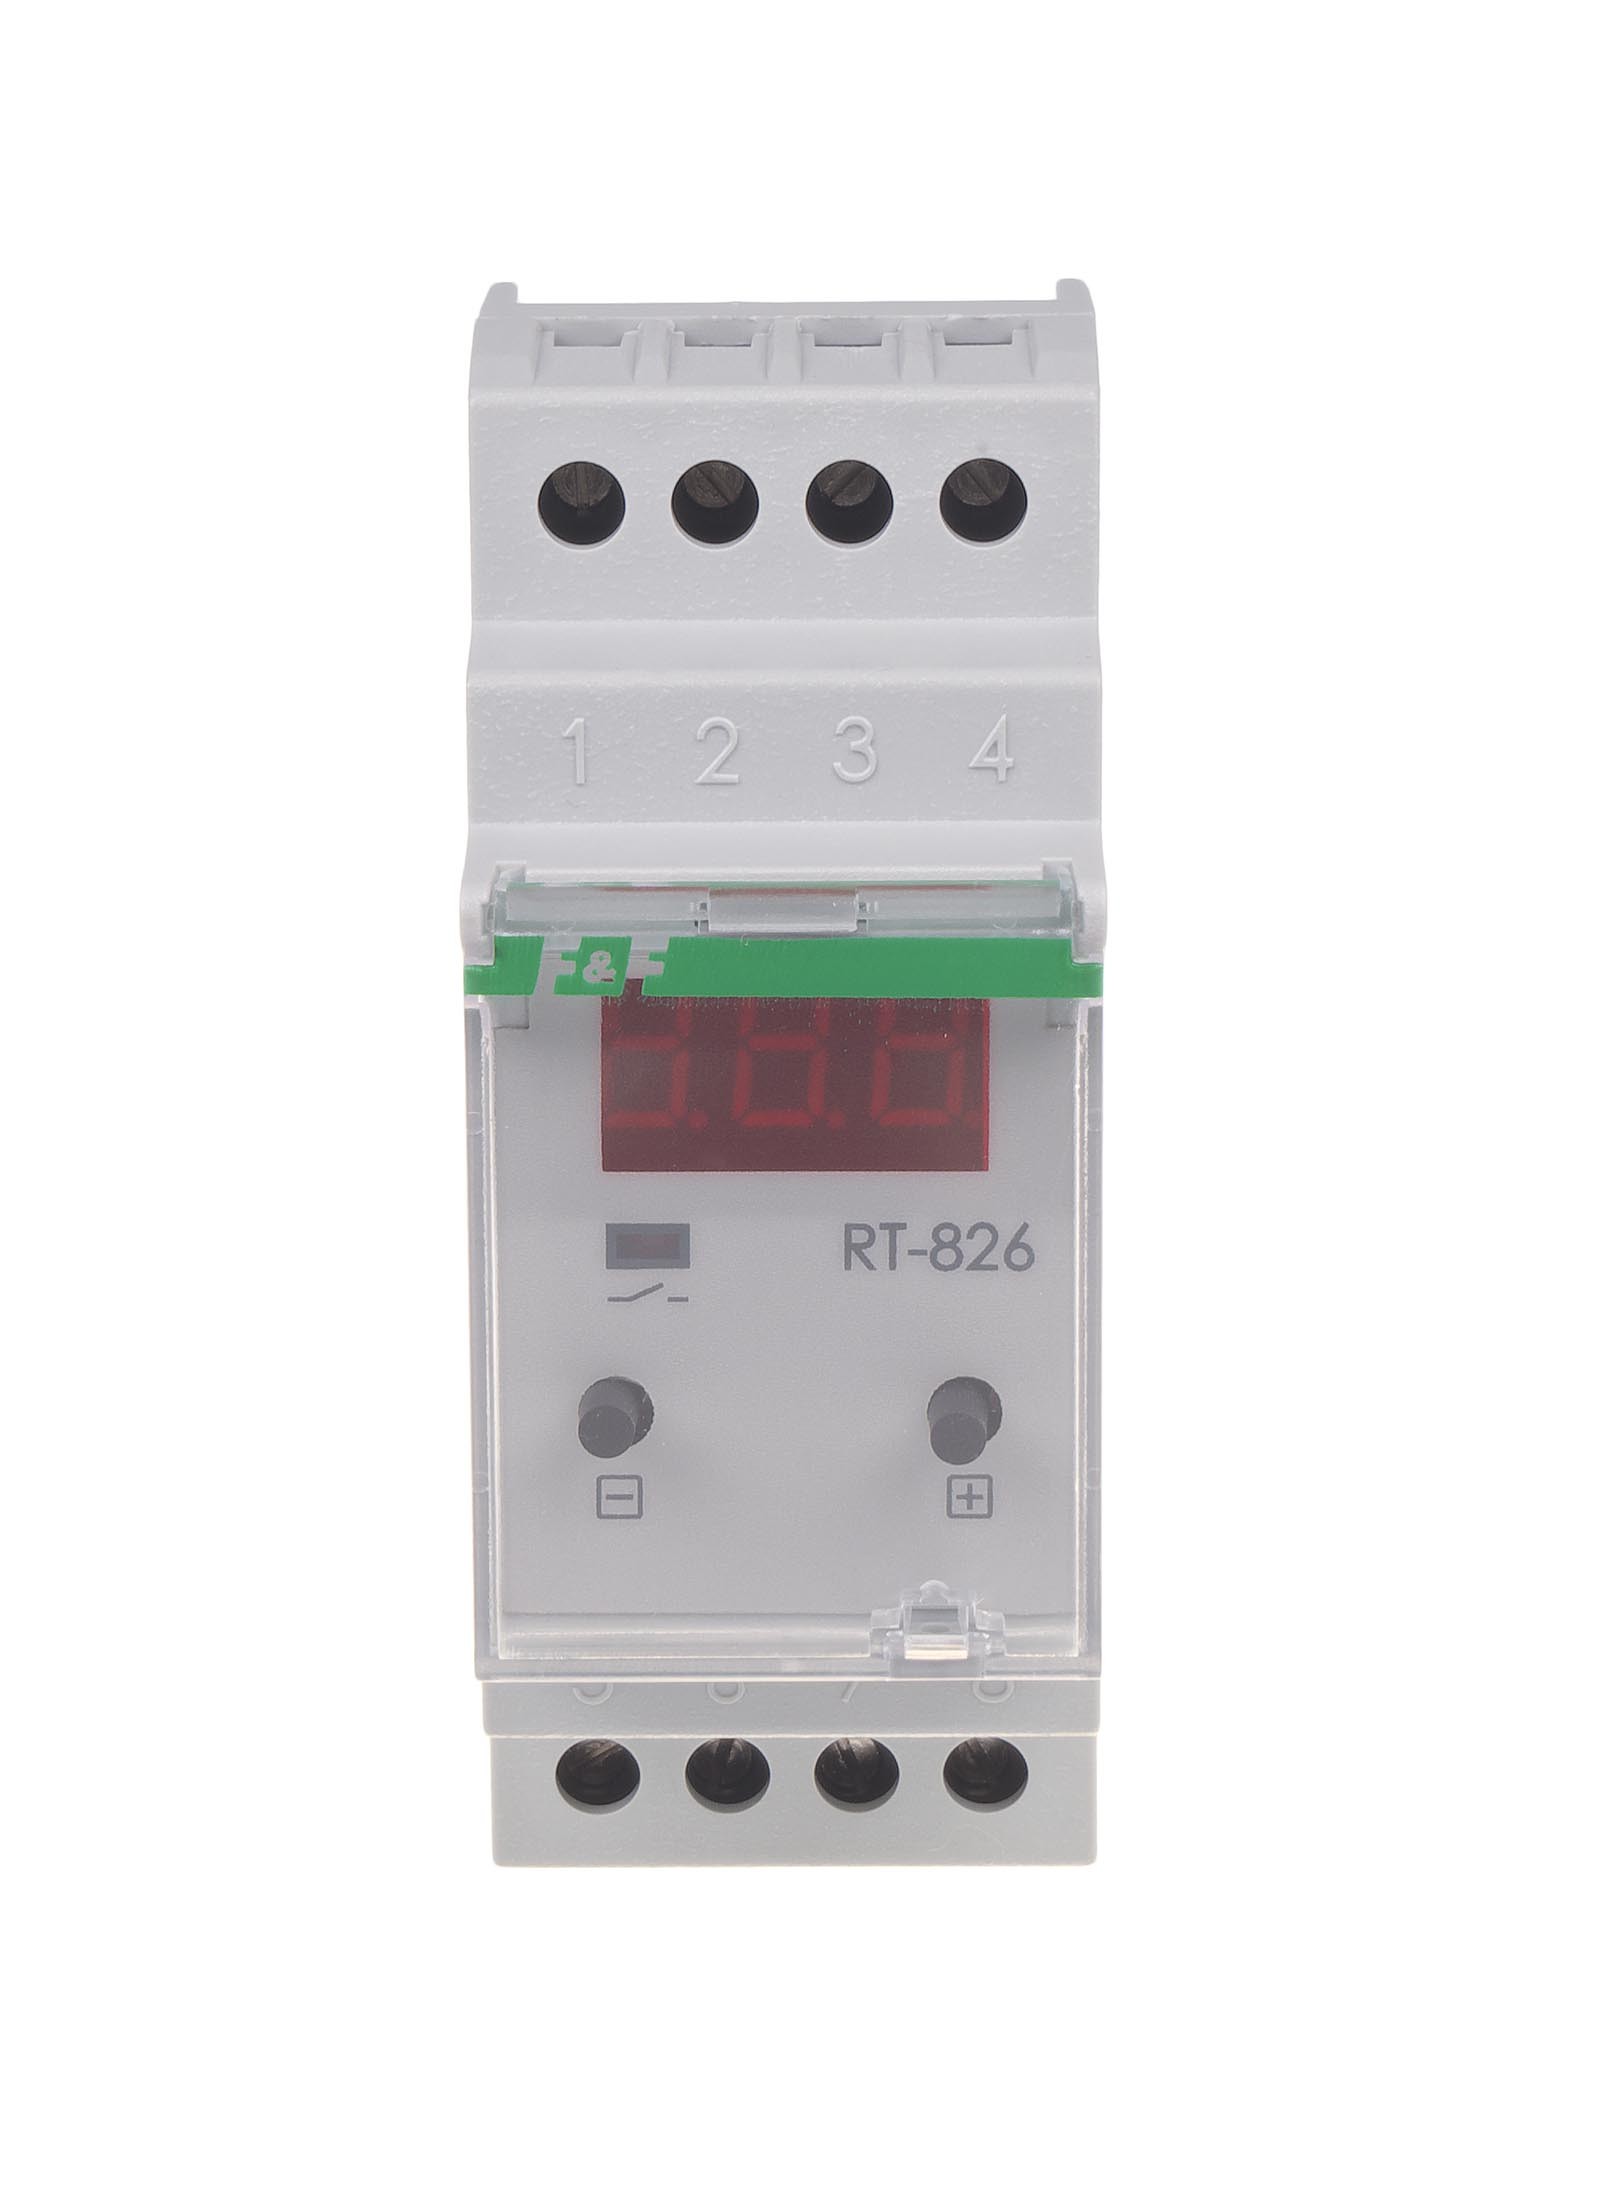 F&F RT-820 Temperaturregler 230V AC 16A Temperaturregelbereich 4°C bis 30°C  DIN